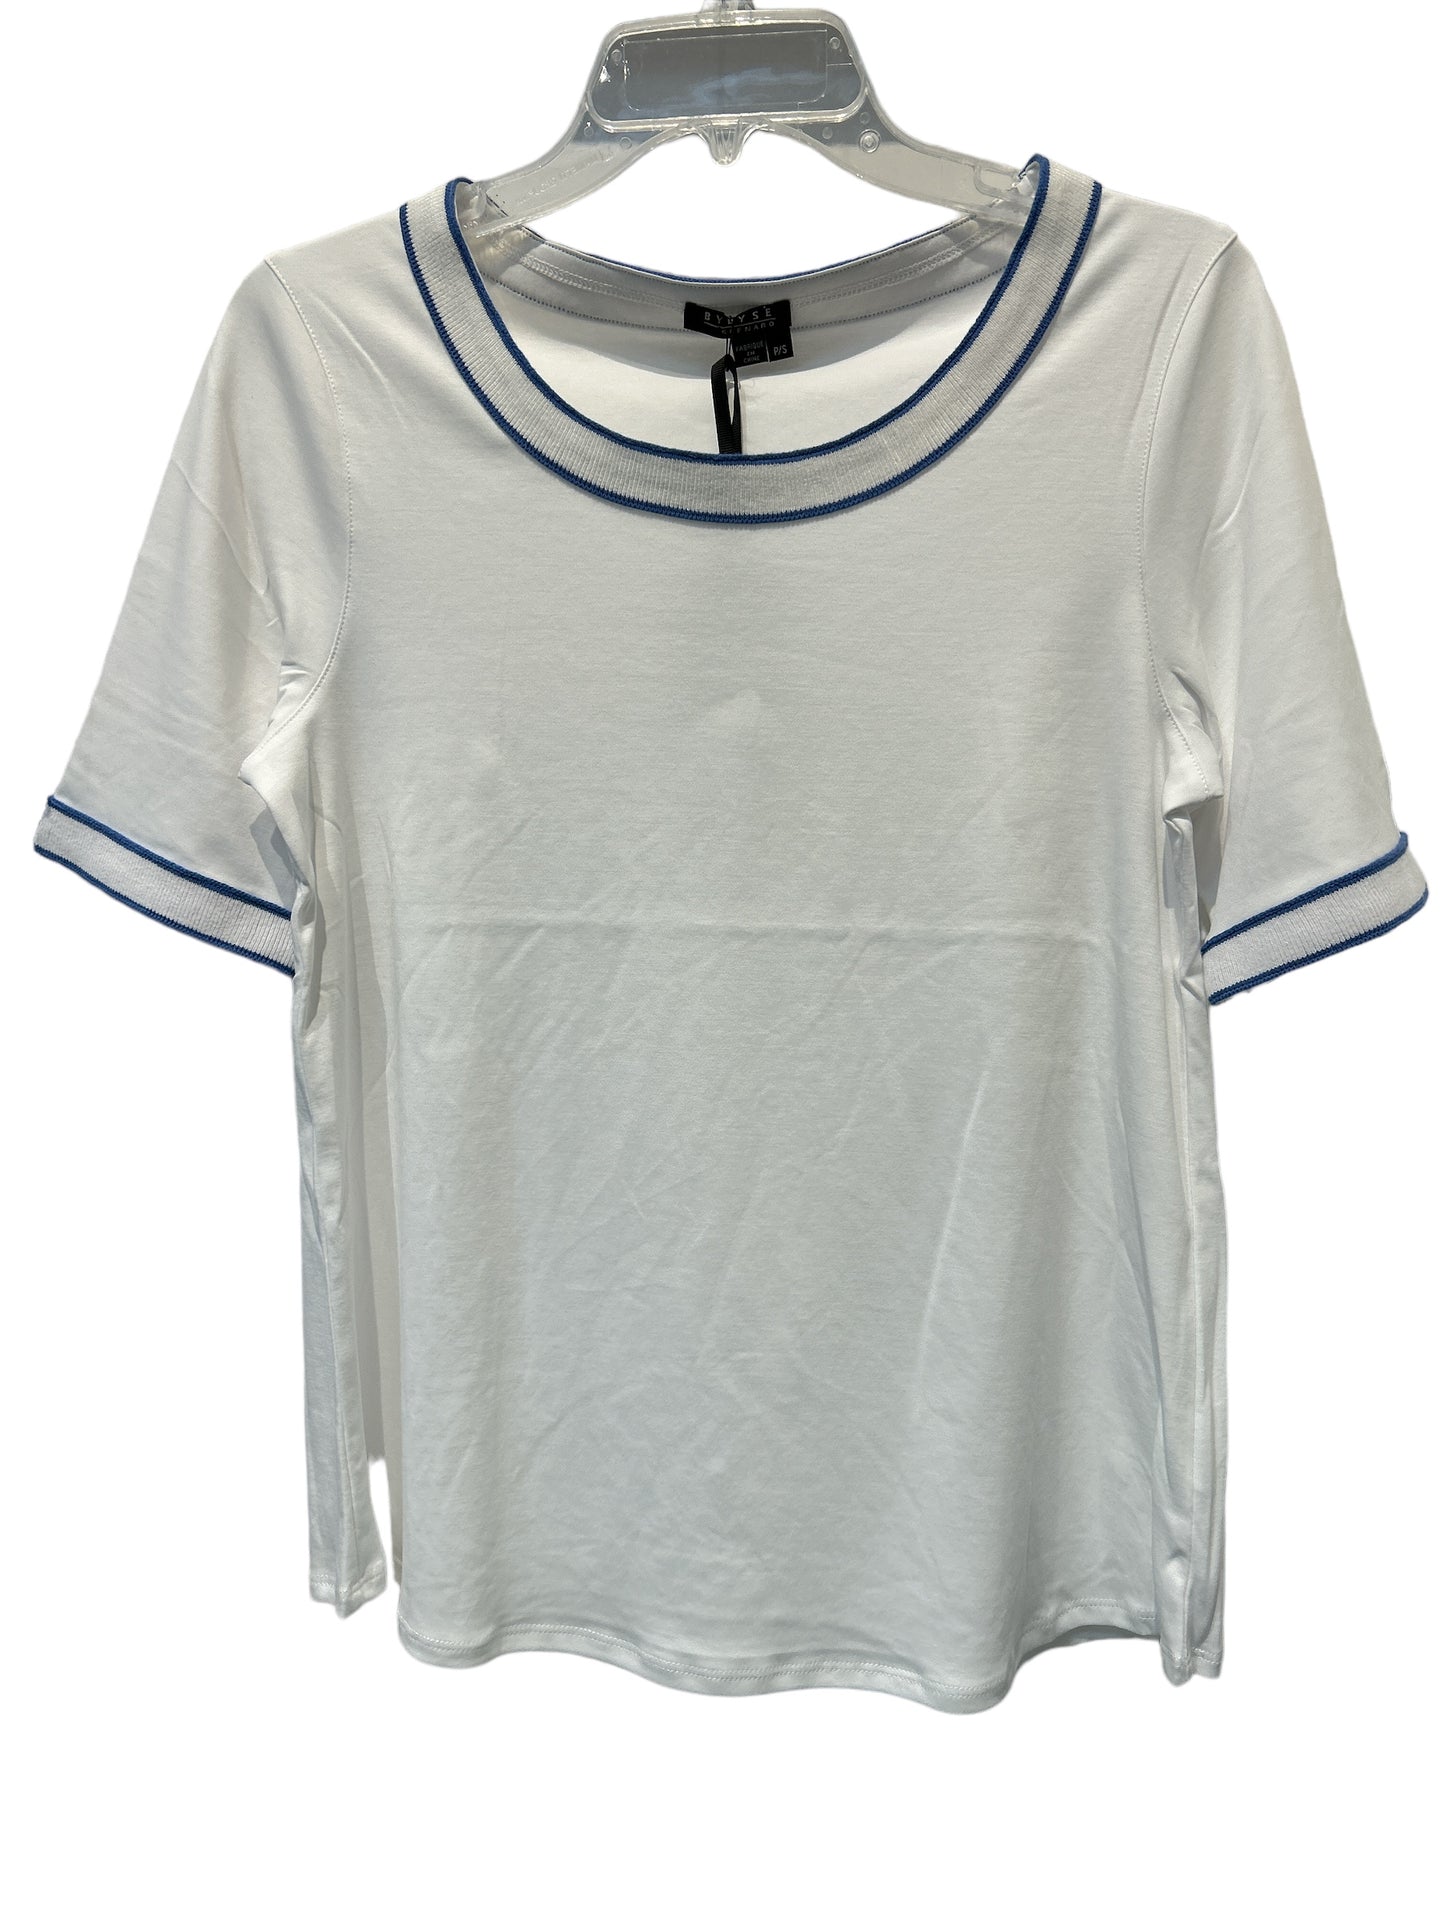 BYLYSE Knit Trim Basic T-Shirt